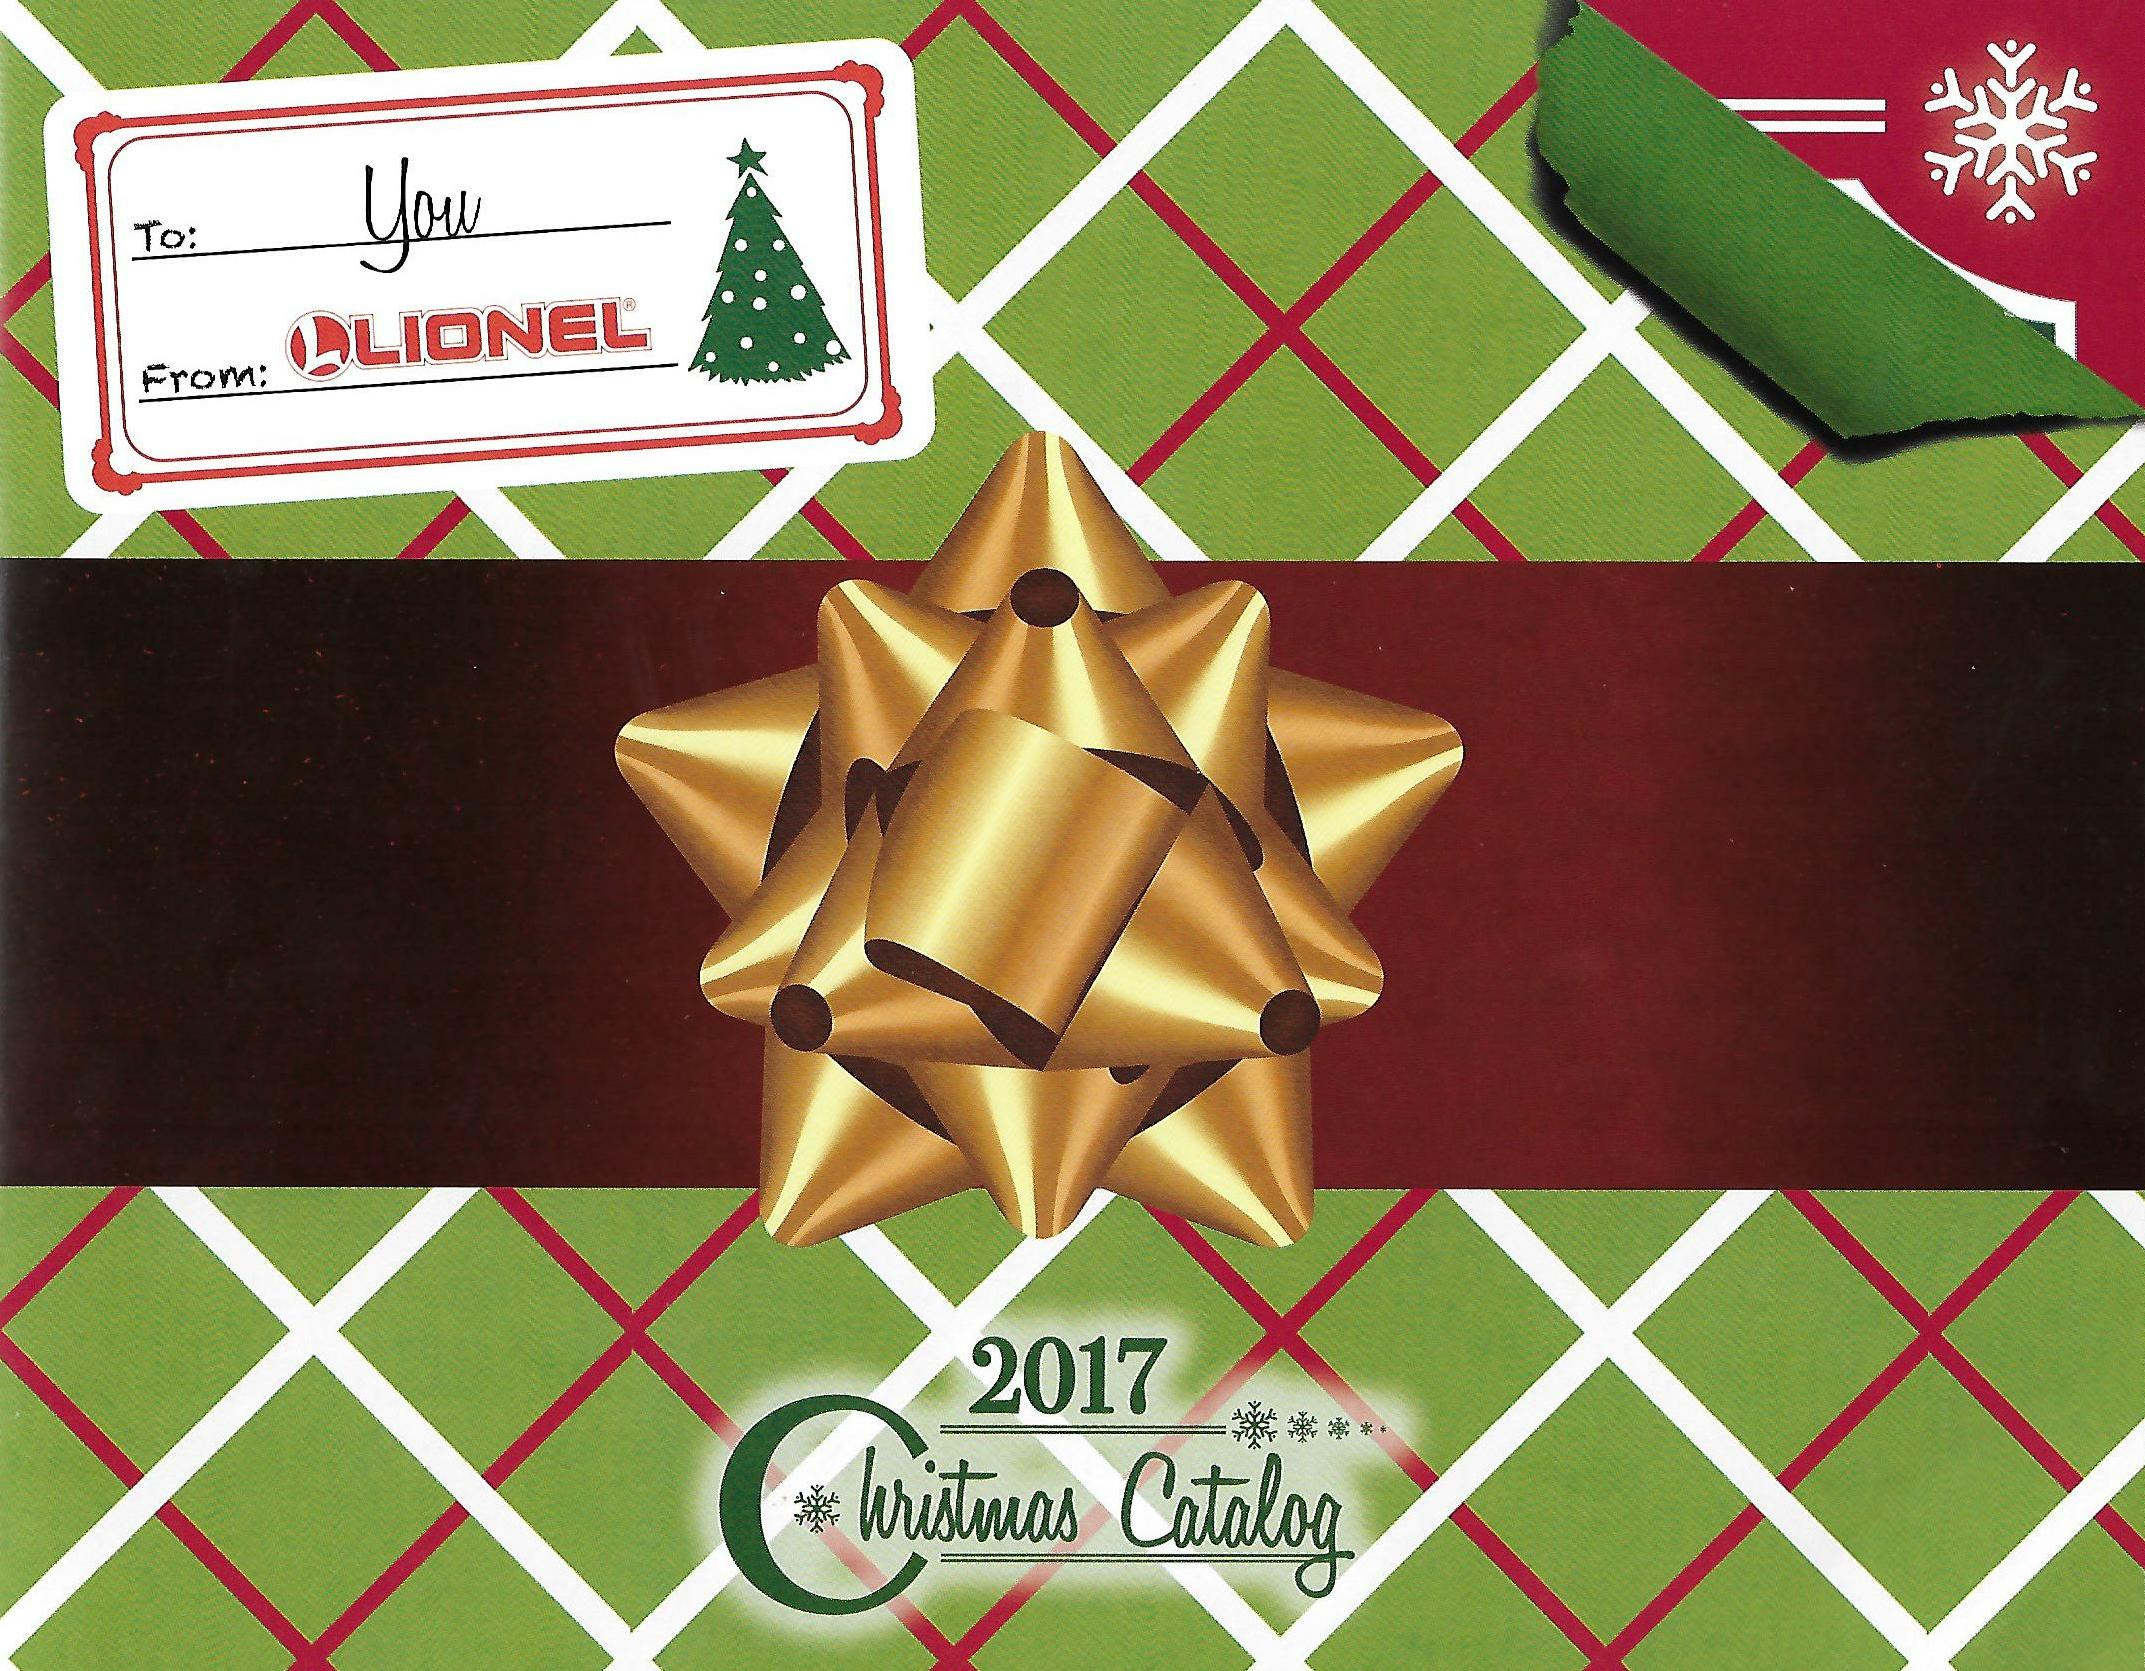 Lionel 2017 Christmas Catalog image